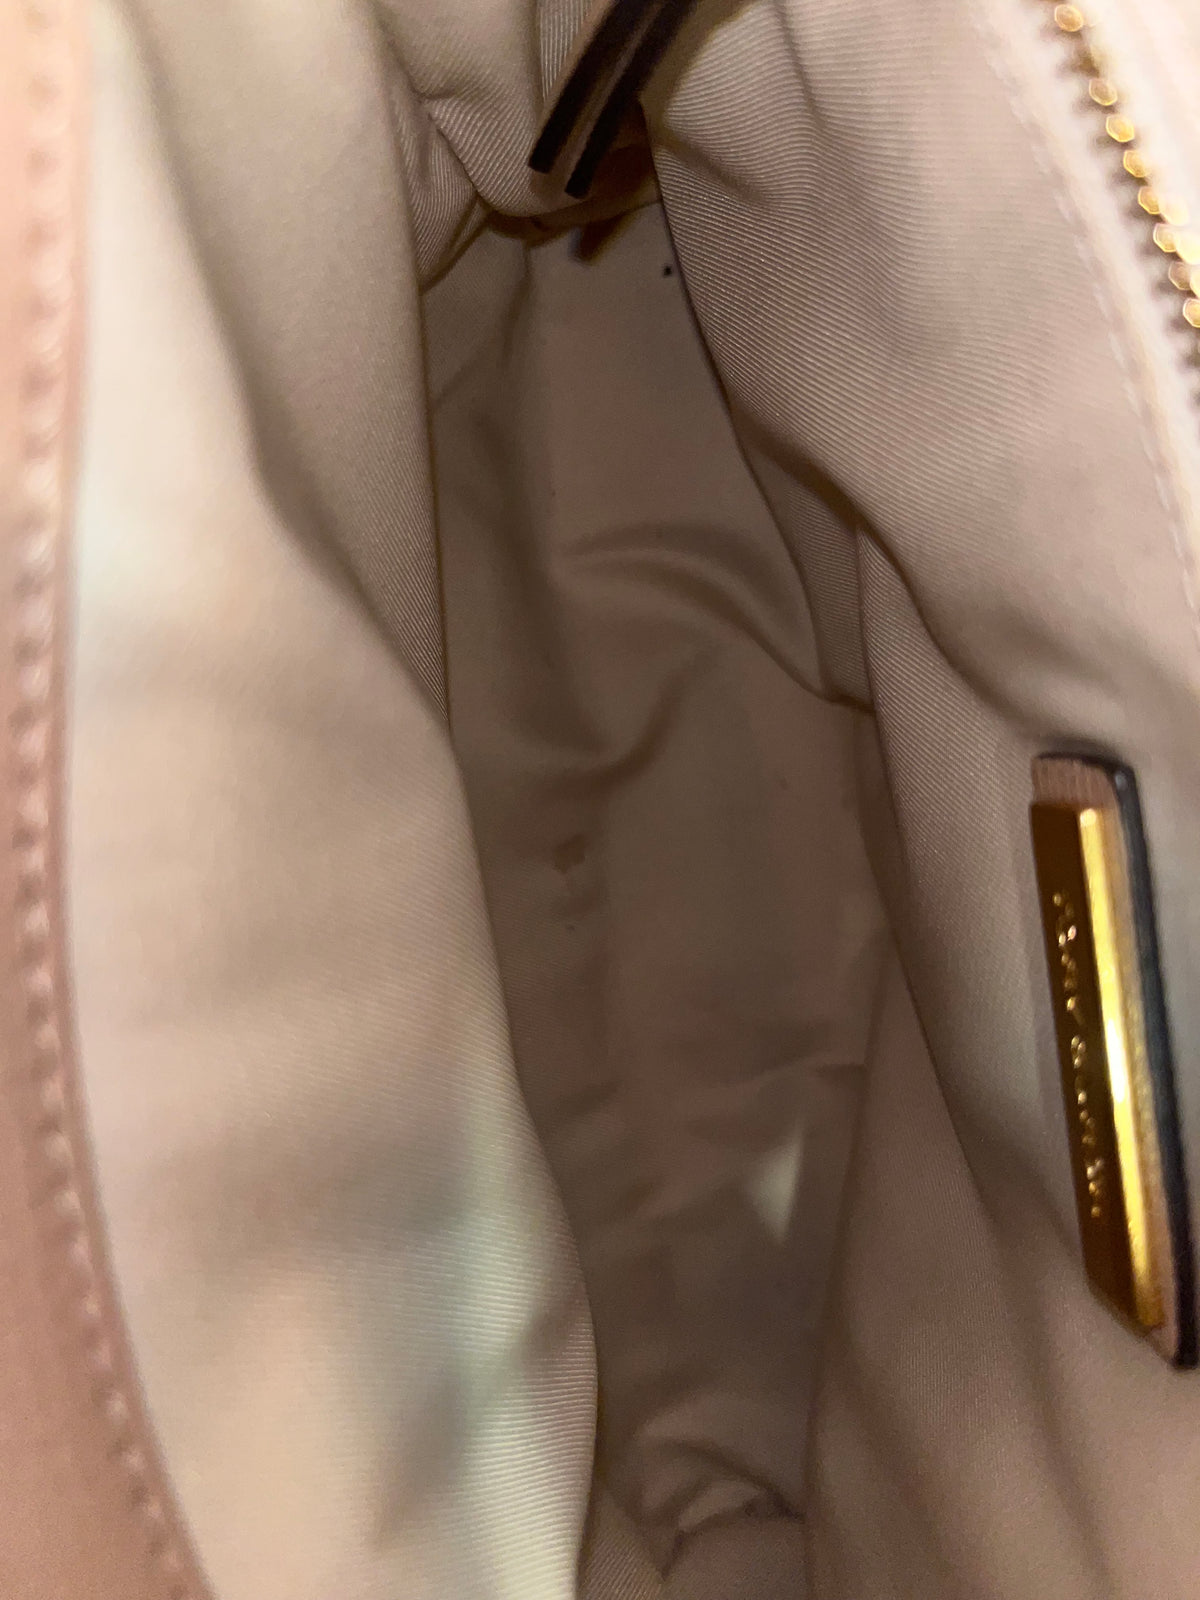 TORY BURCH Nude Kira Small Leather Tote Bag